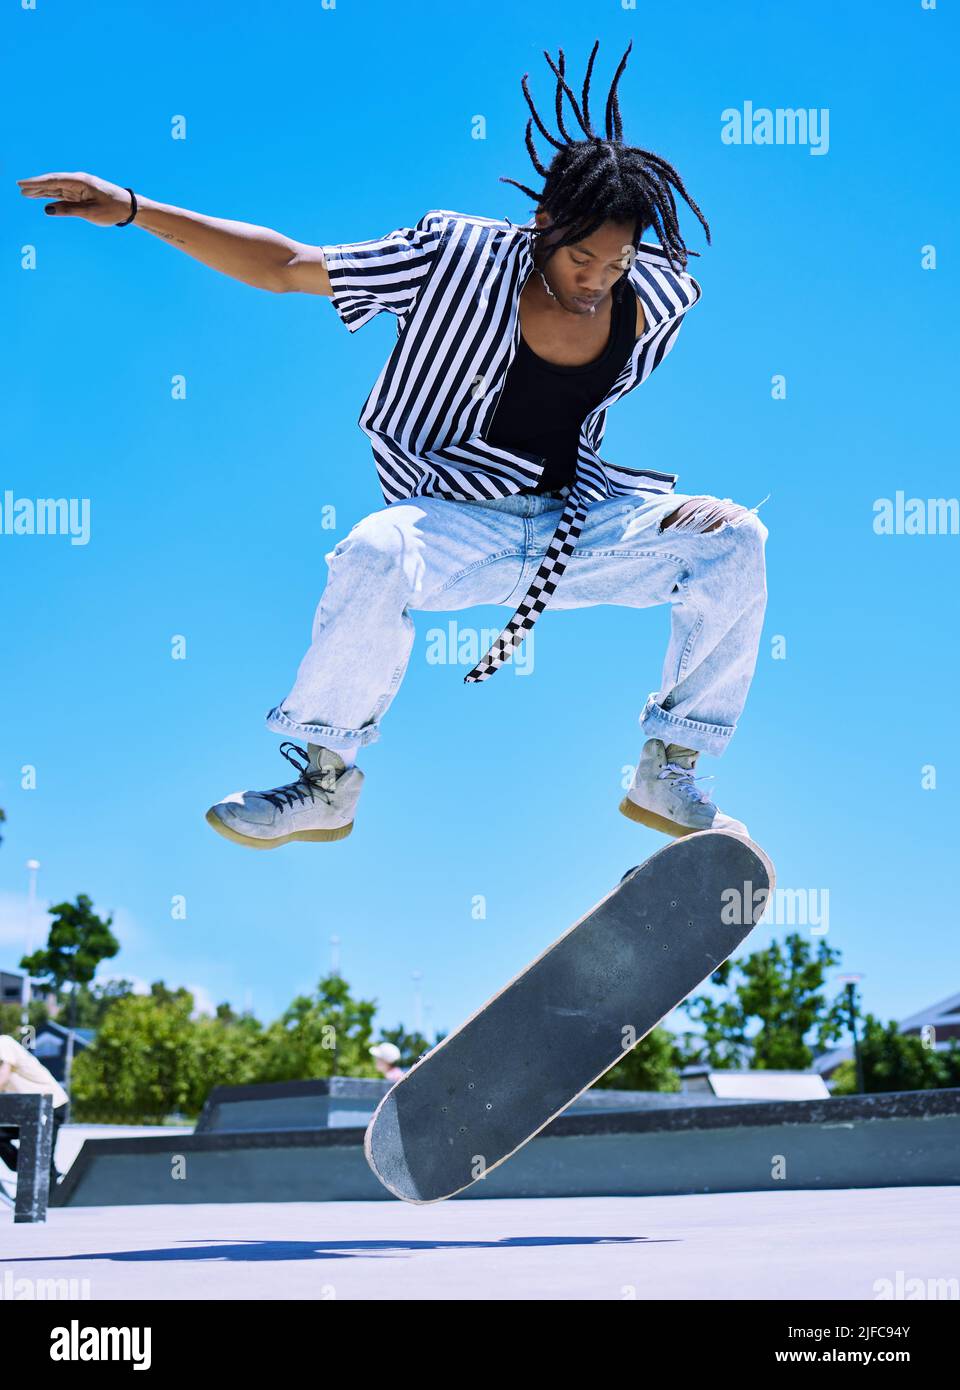 Boy skating board jumping hi-res stock photography and images - Alamy